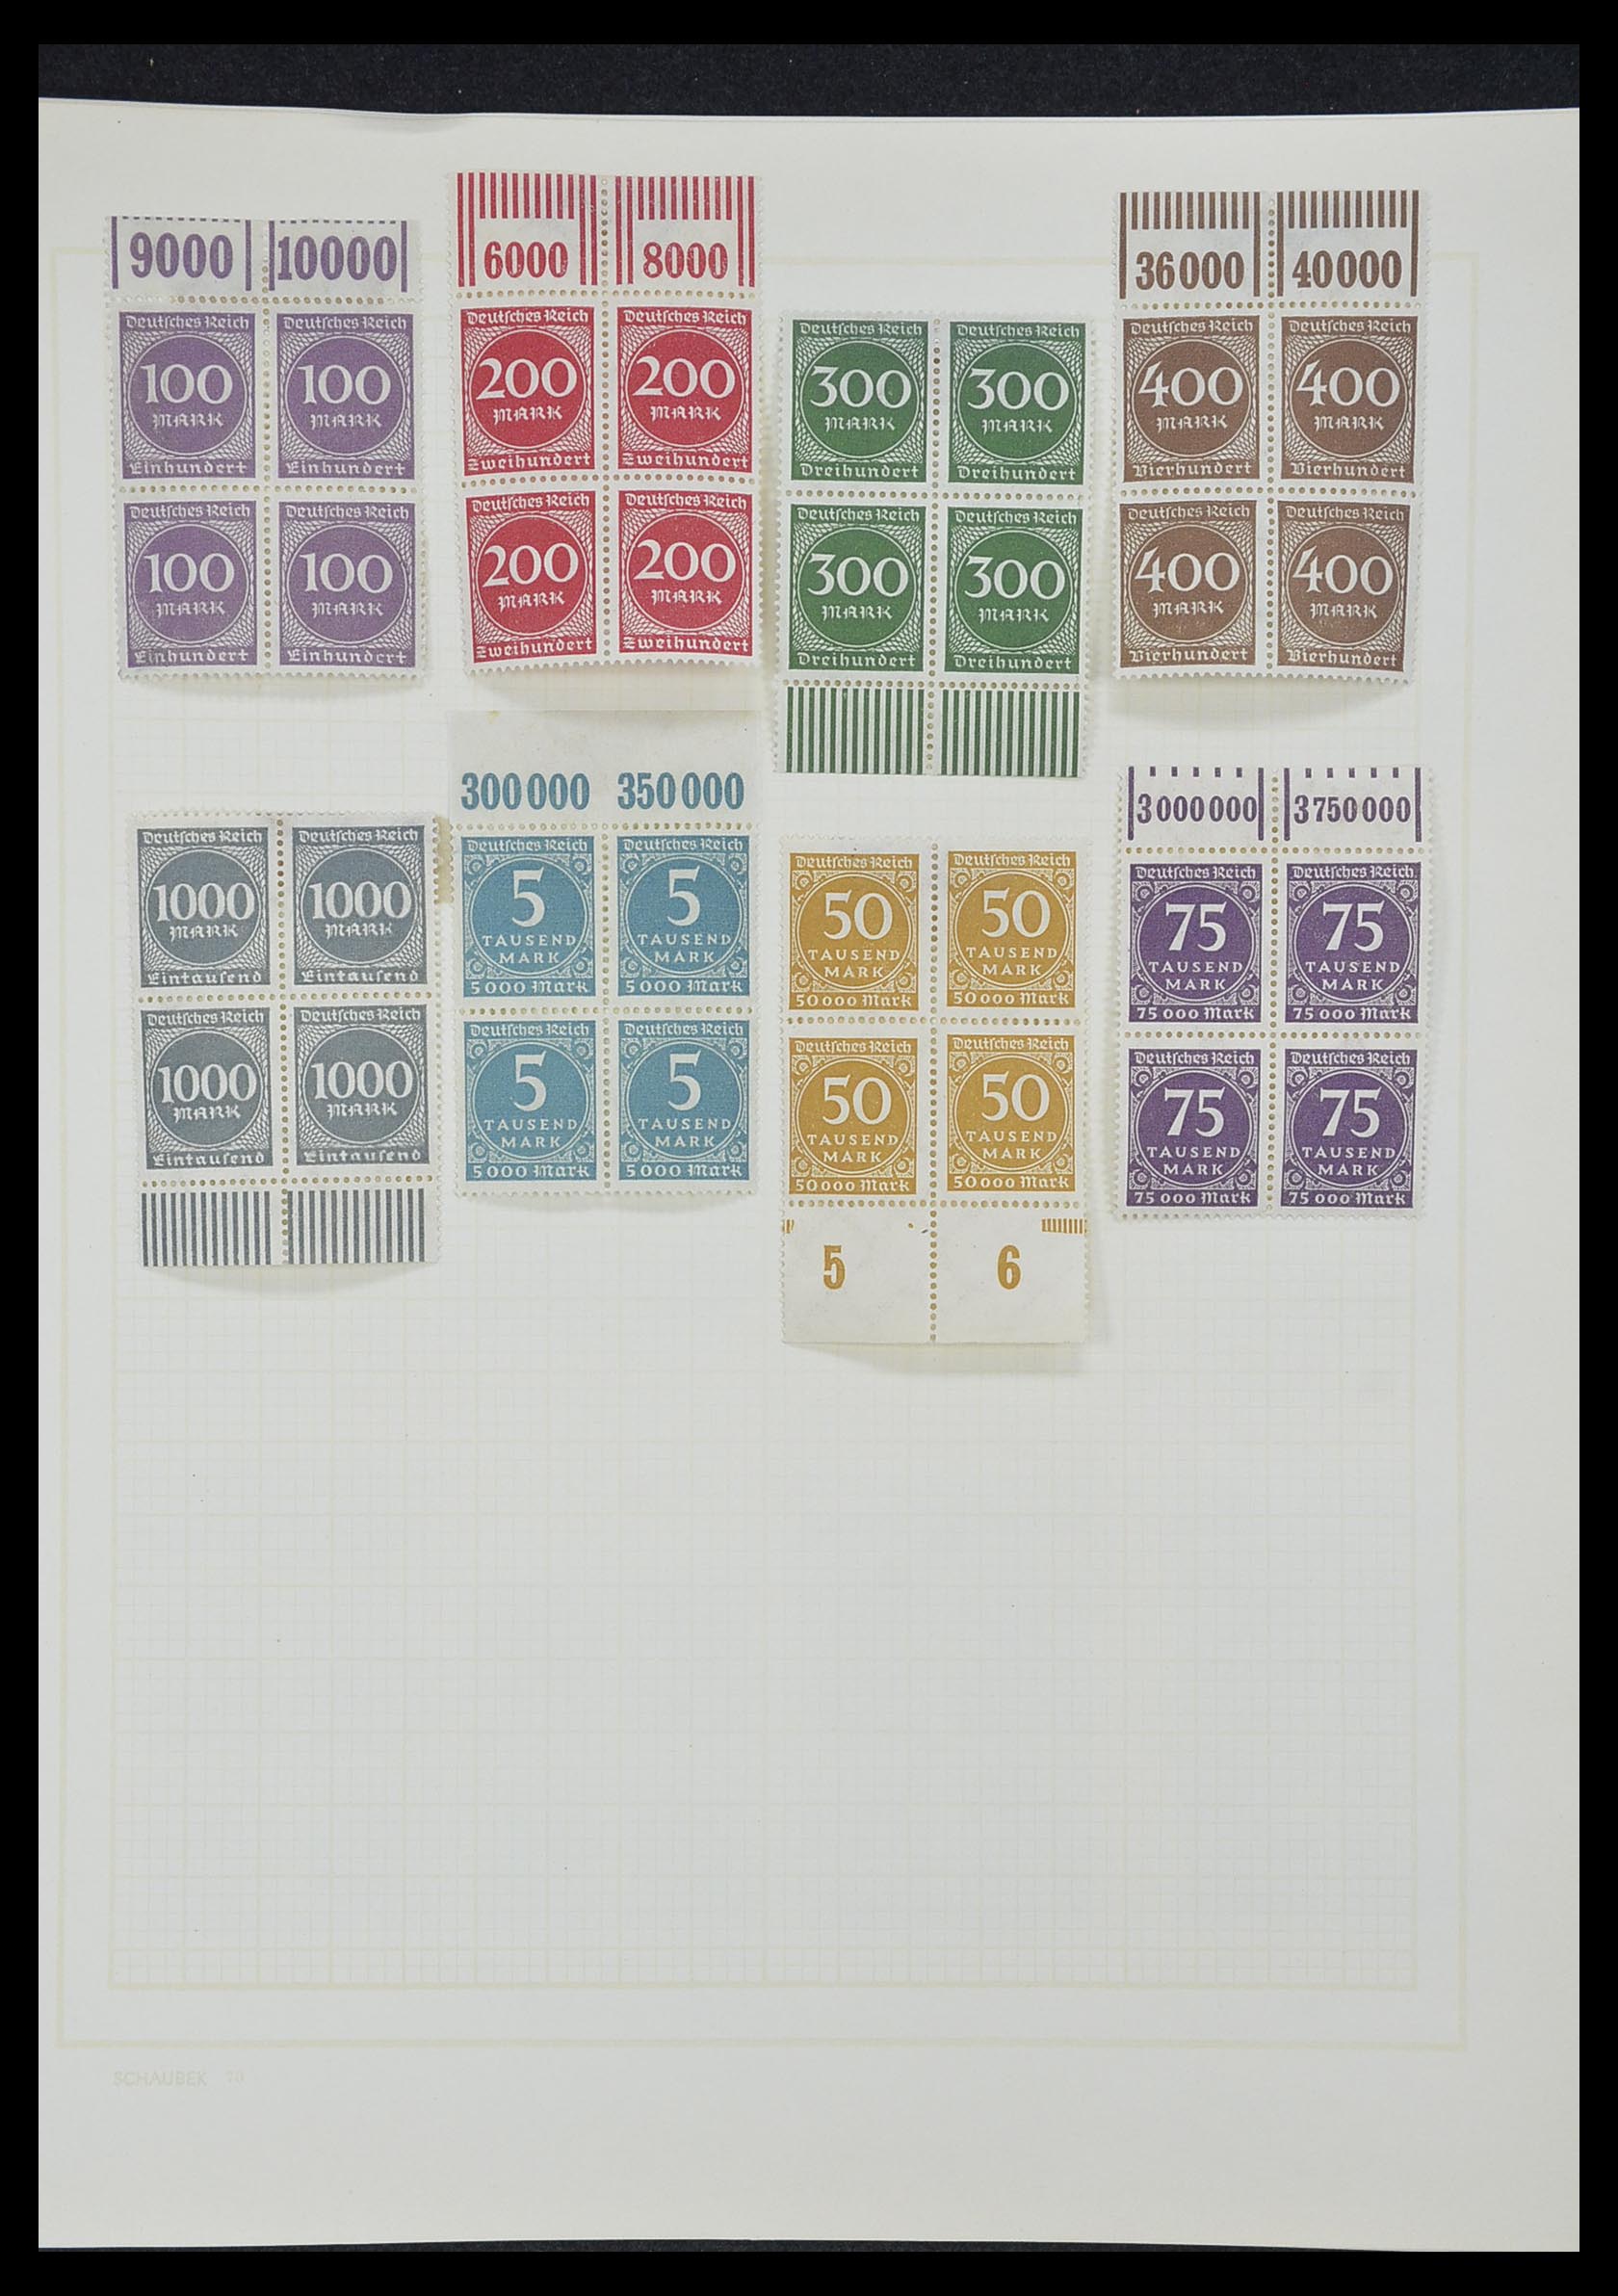 33215 019 - Stamp collection 33215 German Reich 1920-1945.